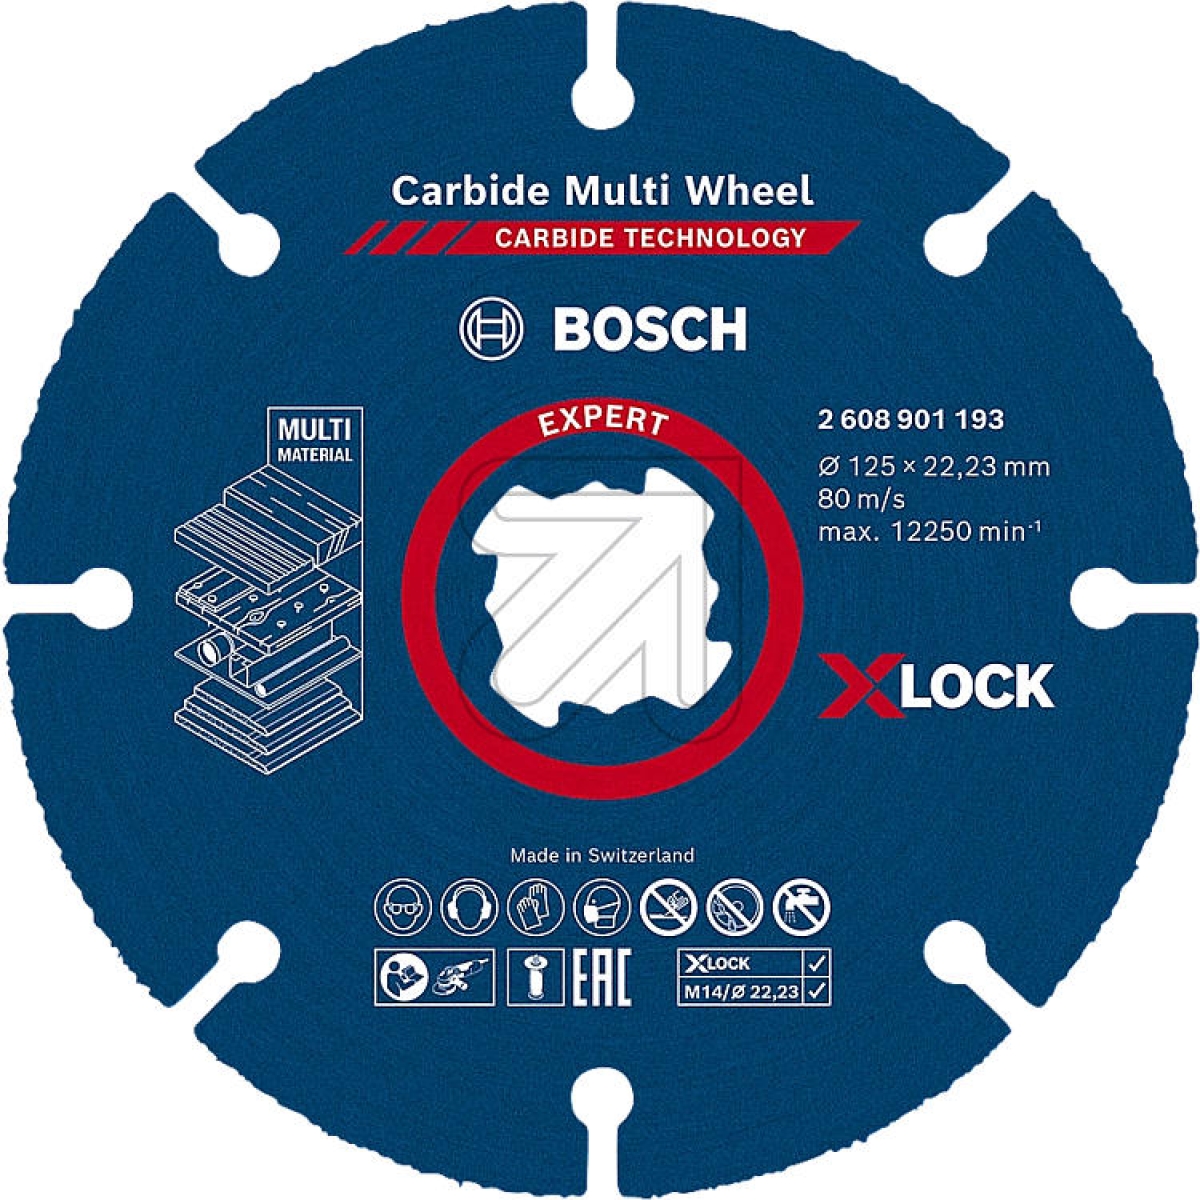 BoschX-LOCK CMW 125x22.23mm EXPERT 2608901193Artikel-Nr: 749240